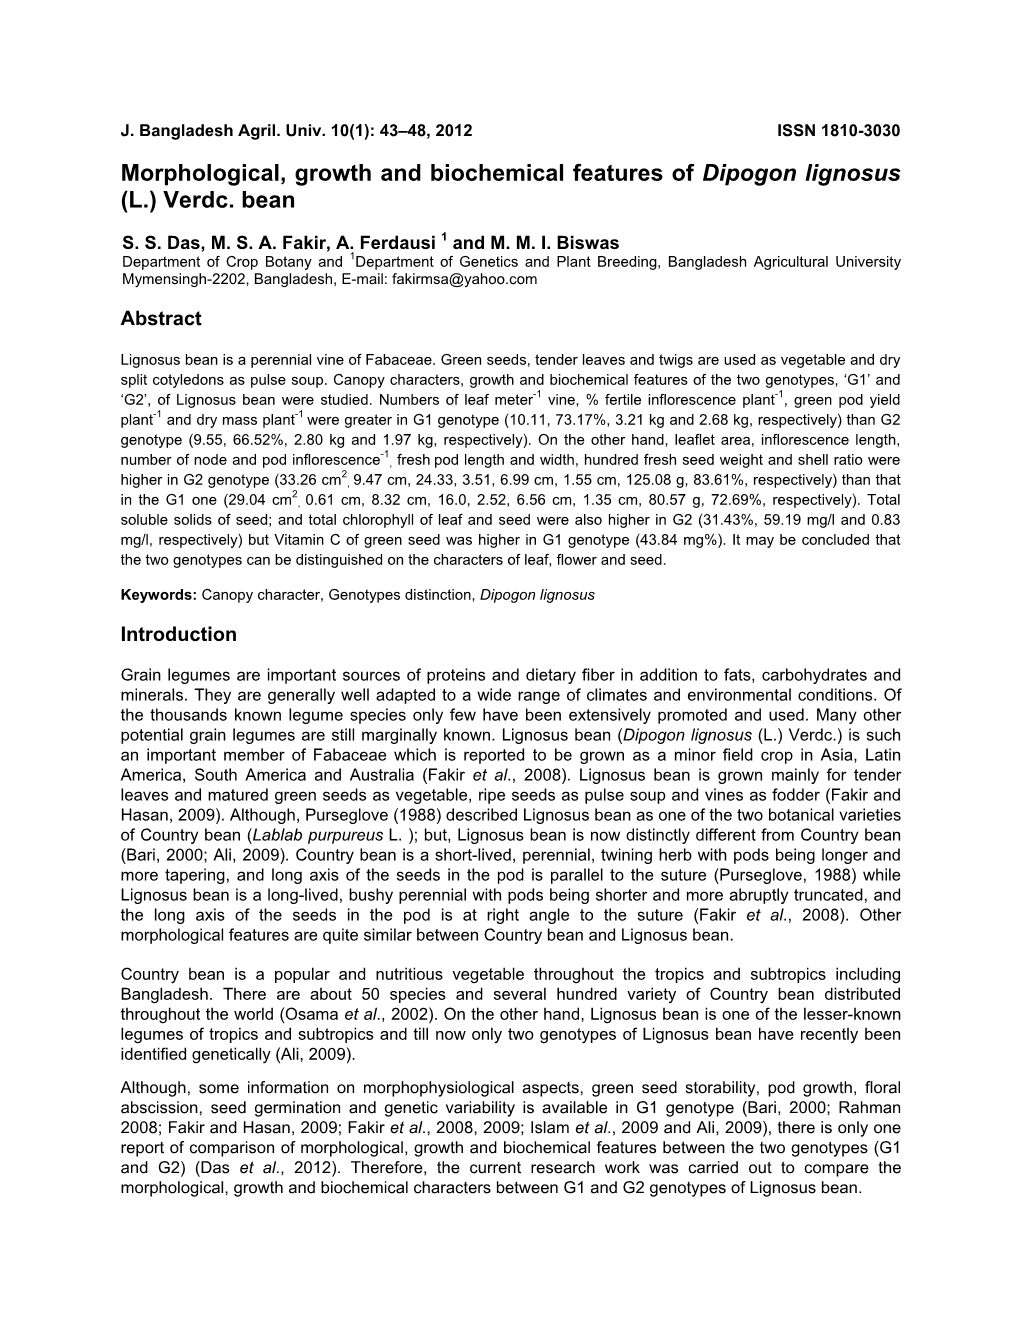 Morphological, Growth and Biochemical Features of Dipogon Lignosus (L.) Verdc